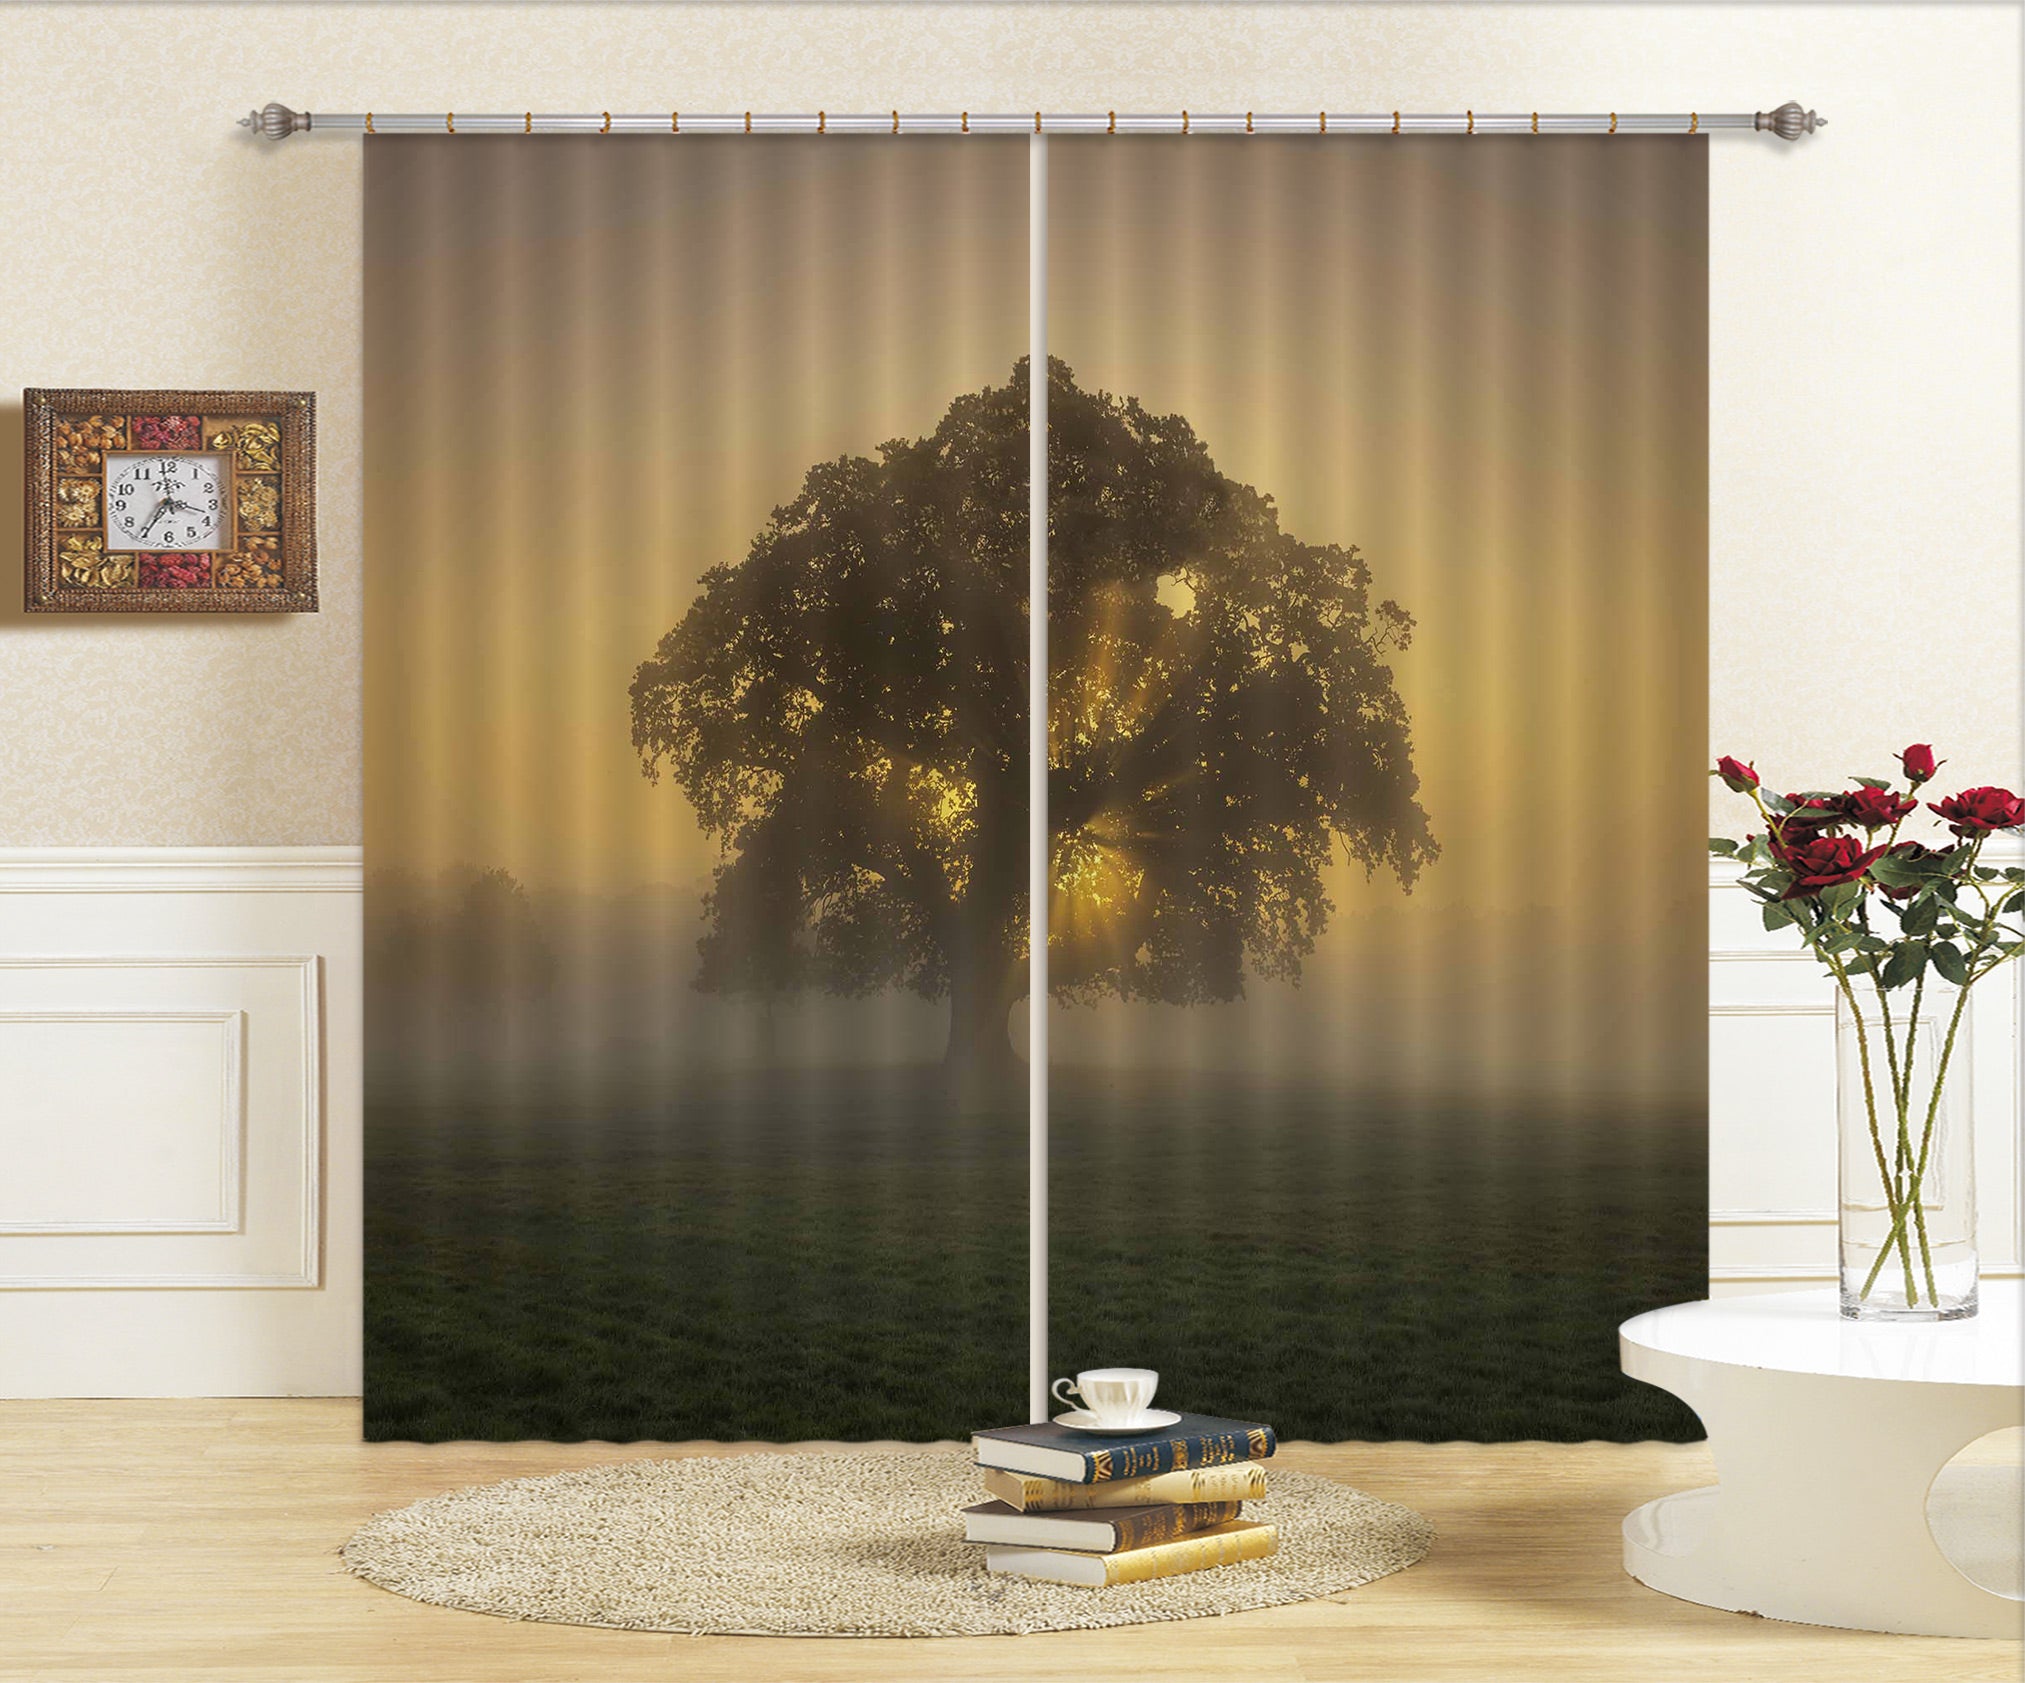 3D Dense Tree 040 Assaf Frank Curtain Curtains Drapes